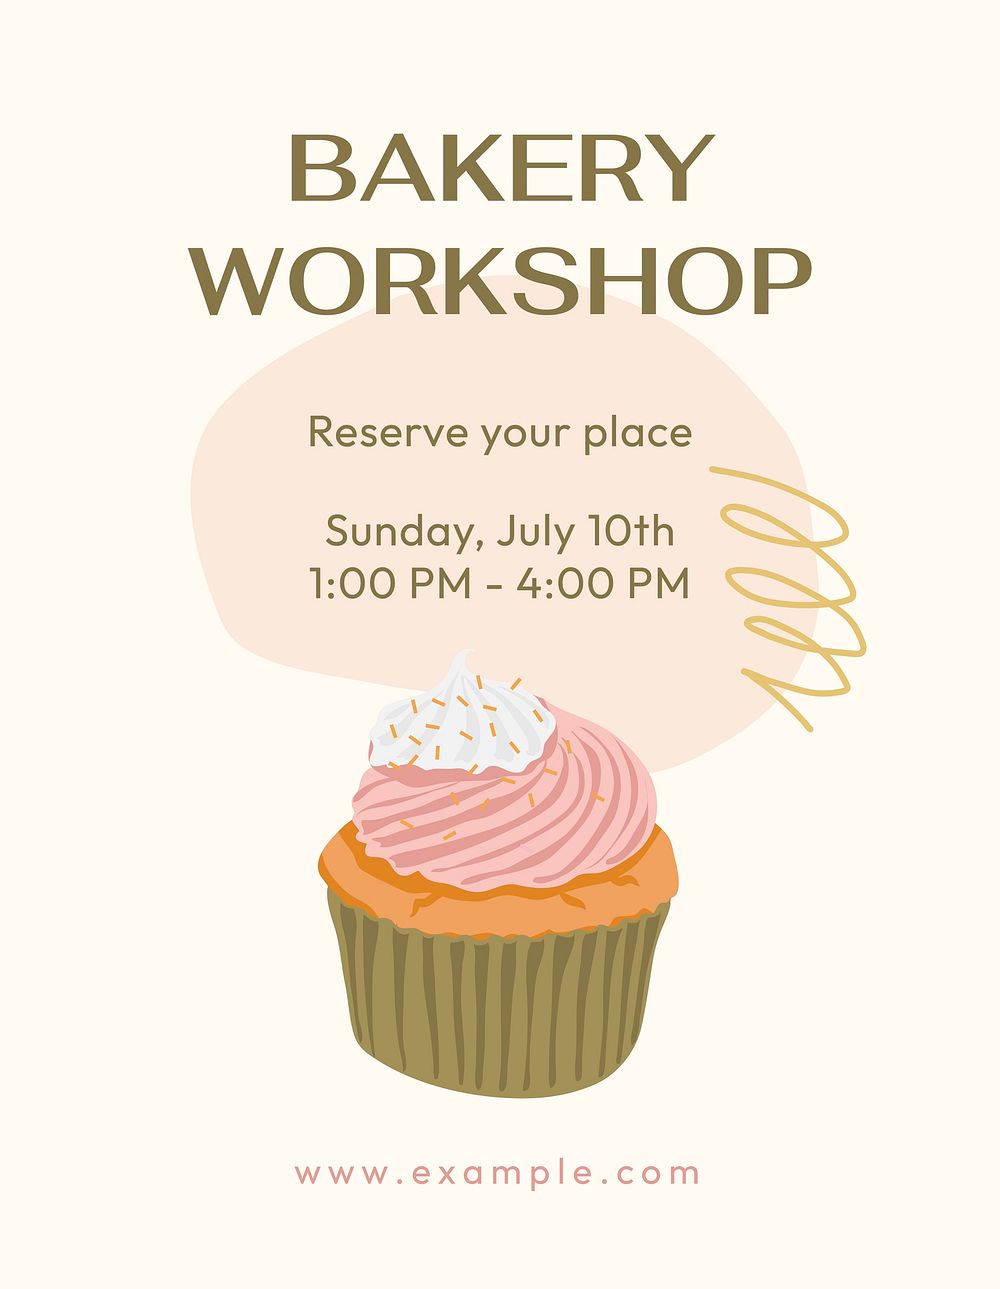 Bakery workshop poster template, cute design vector